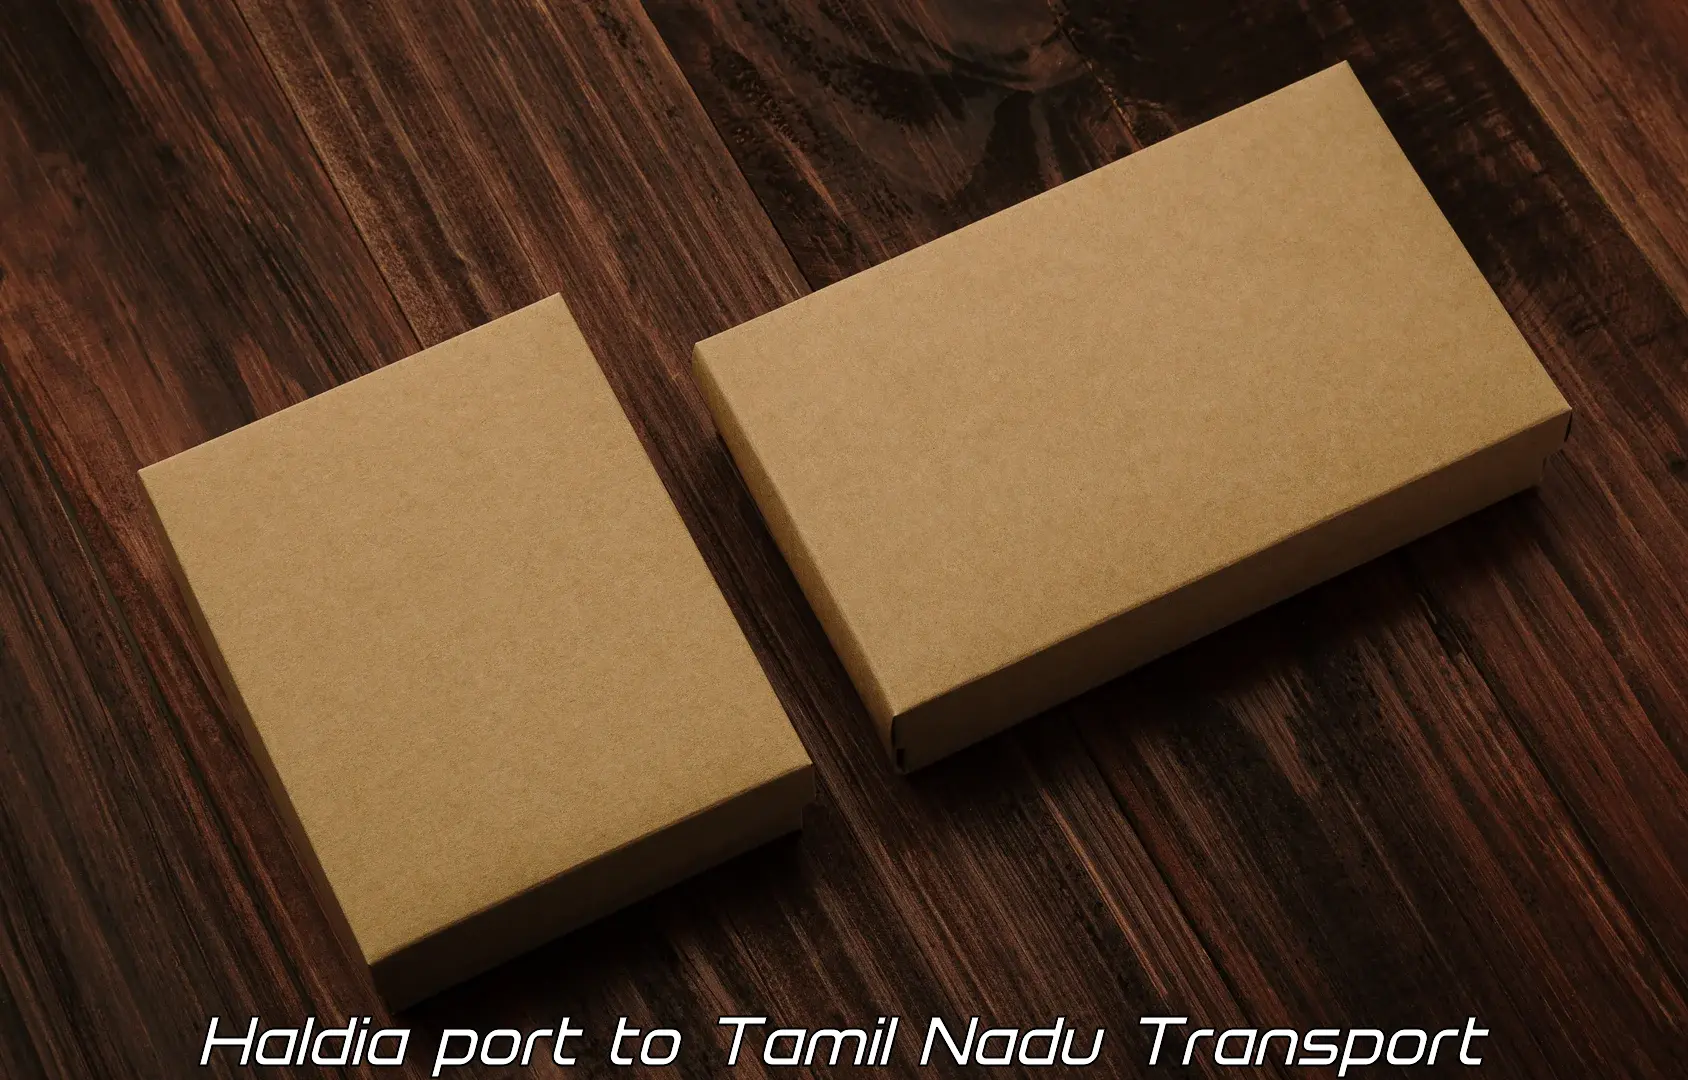 Two wheeler parcel service Haldia port to Virudhachalam